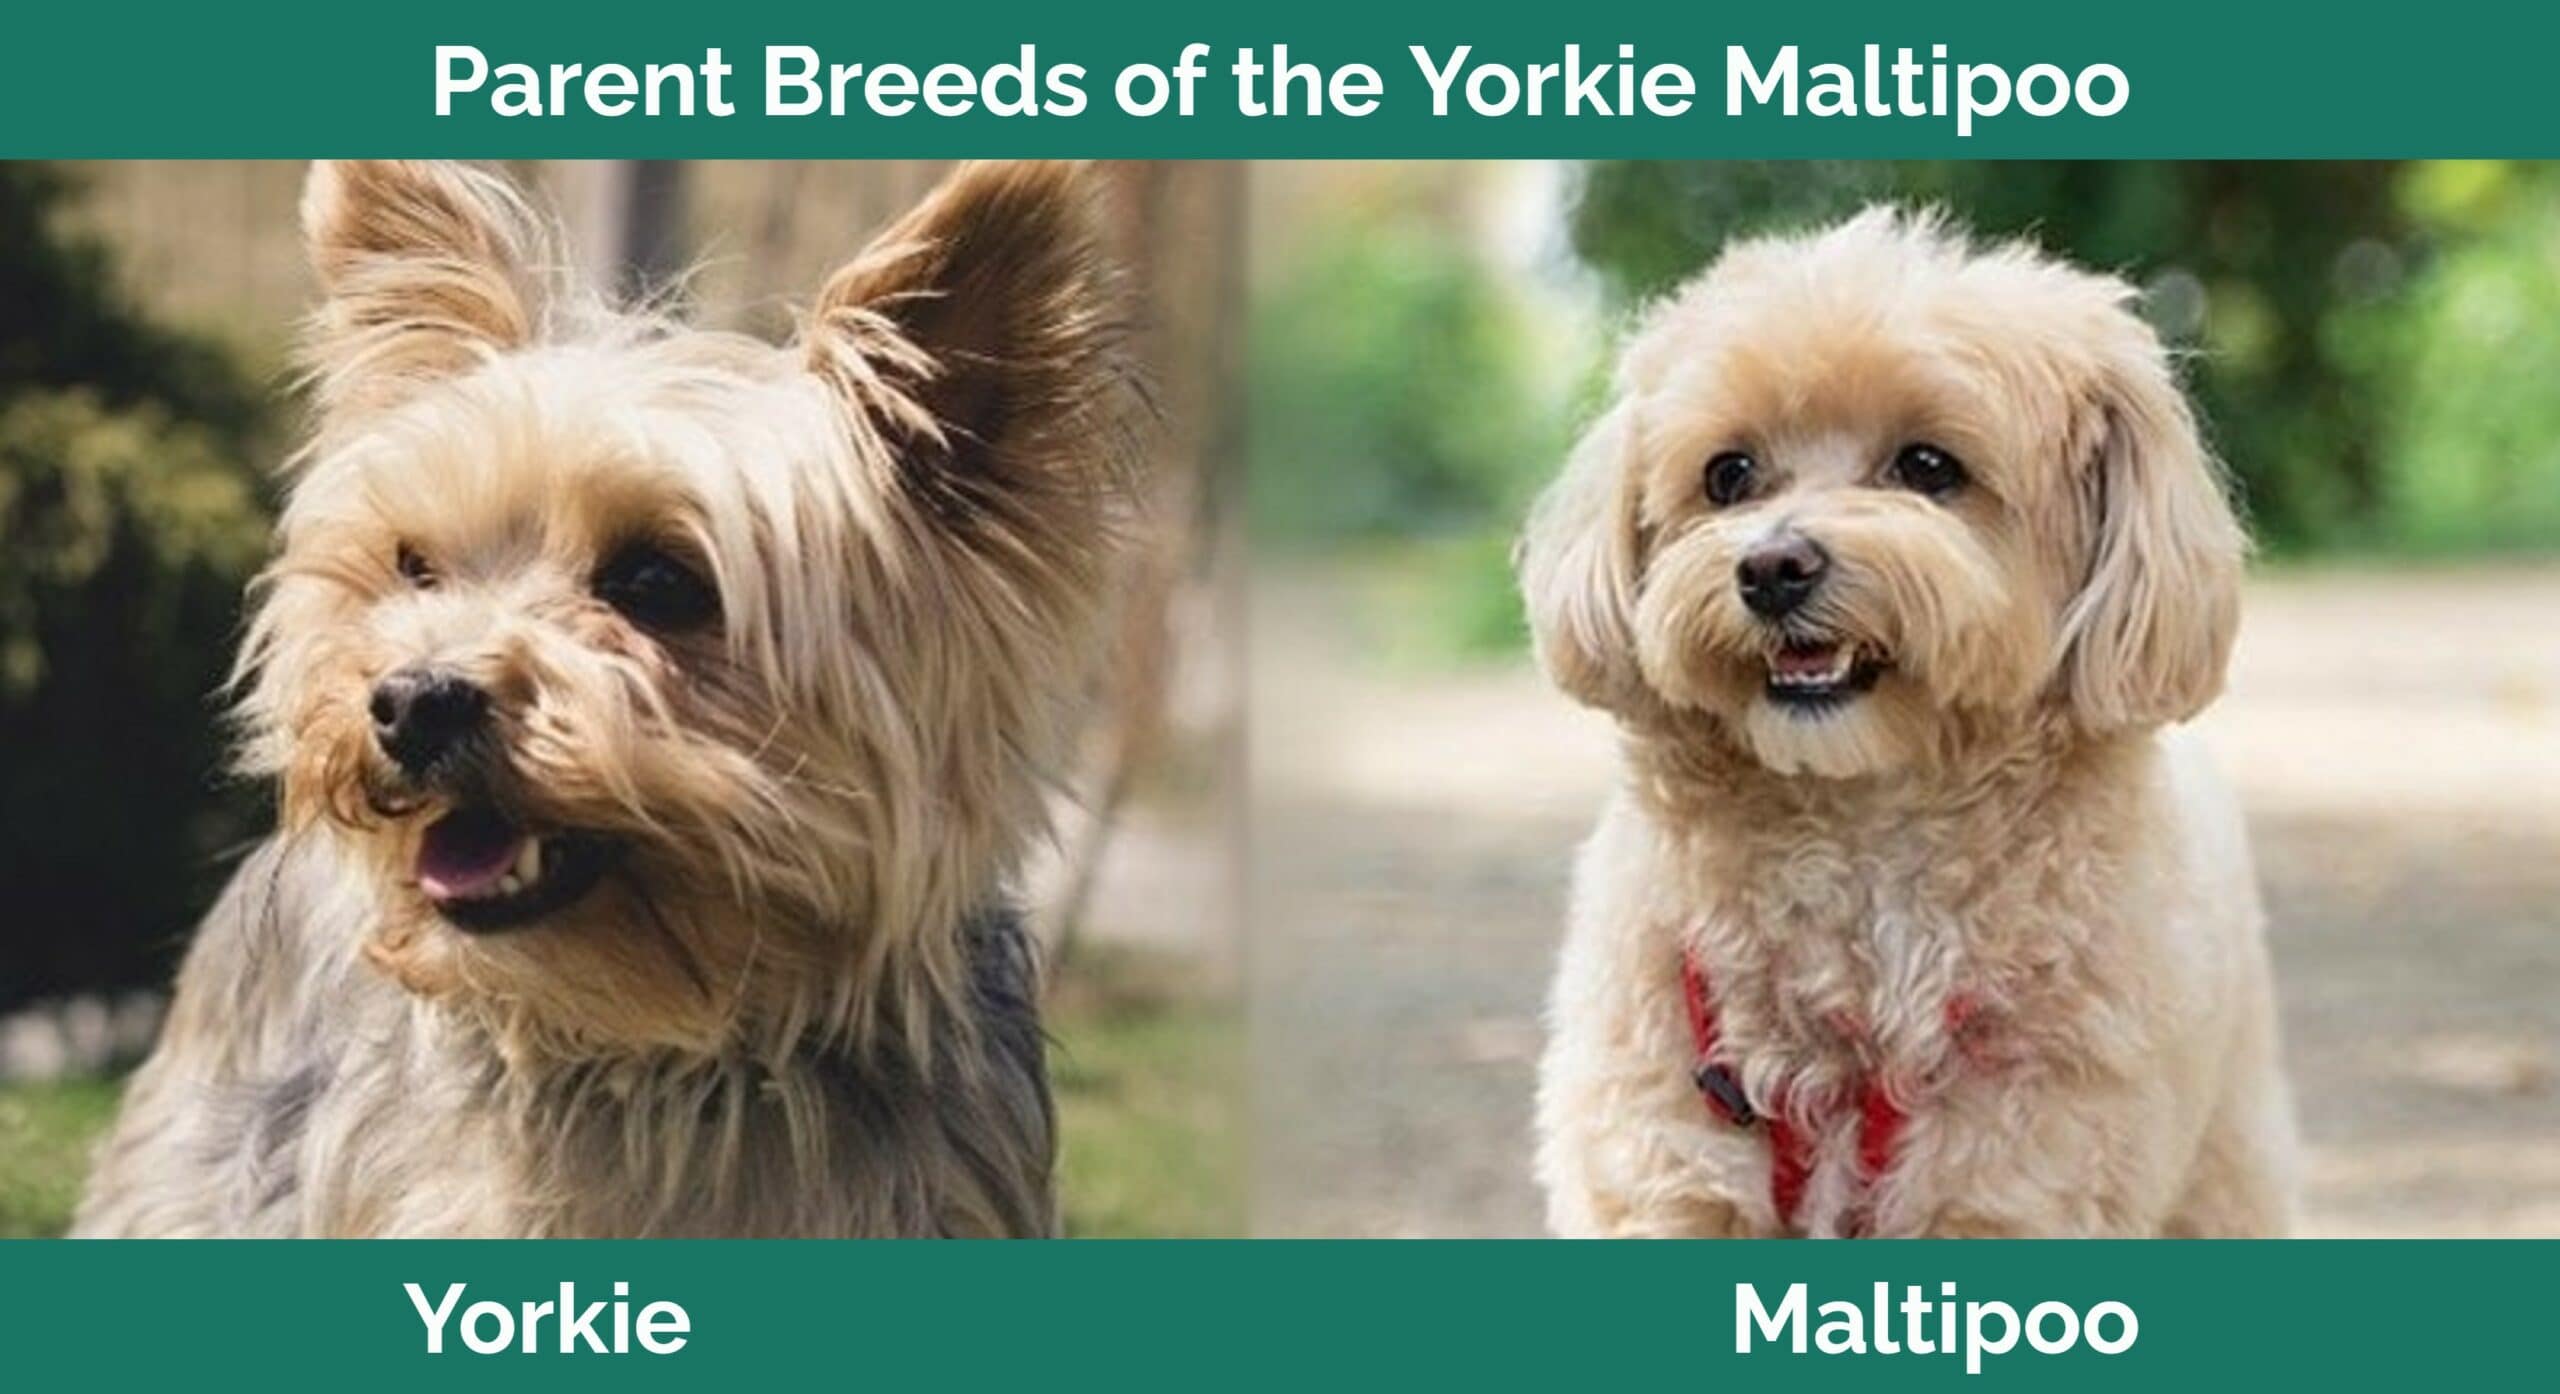 The Parents Breed of Yorkie Maltipoo: Left - Yorkie (Petra, Pixabay); Right - Maltipoo (Irsan Ianushis, Shutterstock)